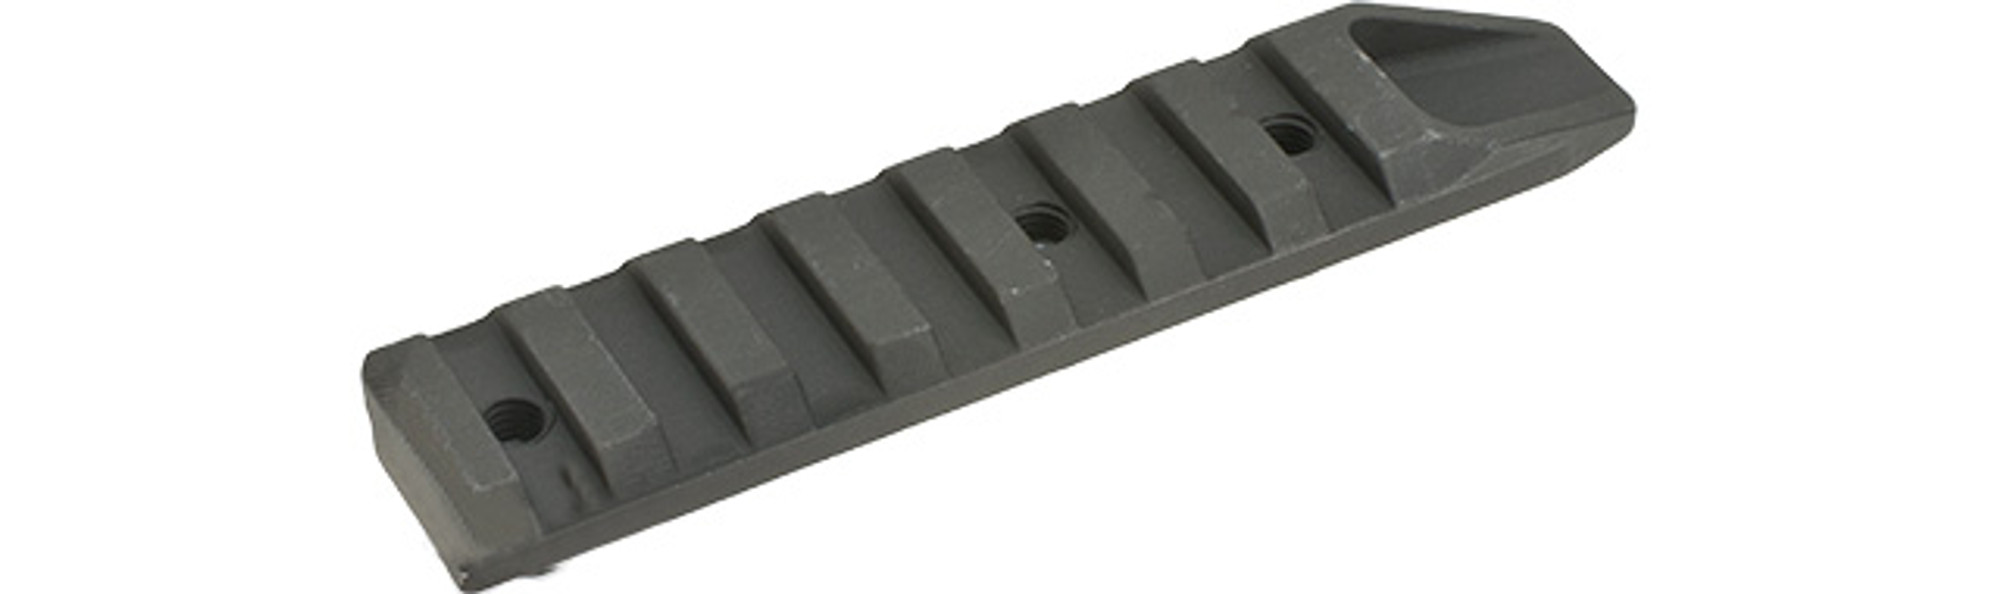 5KU 7 Slot Rail Segment for Keymod RIS Handguards - Black